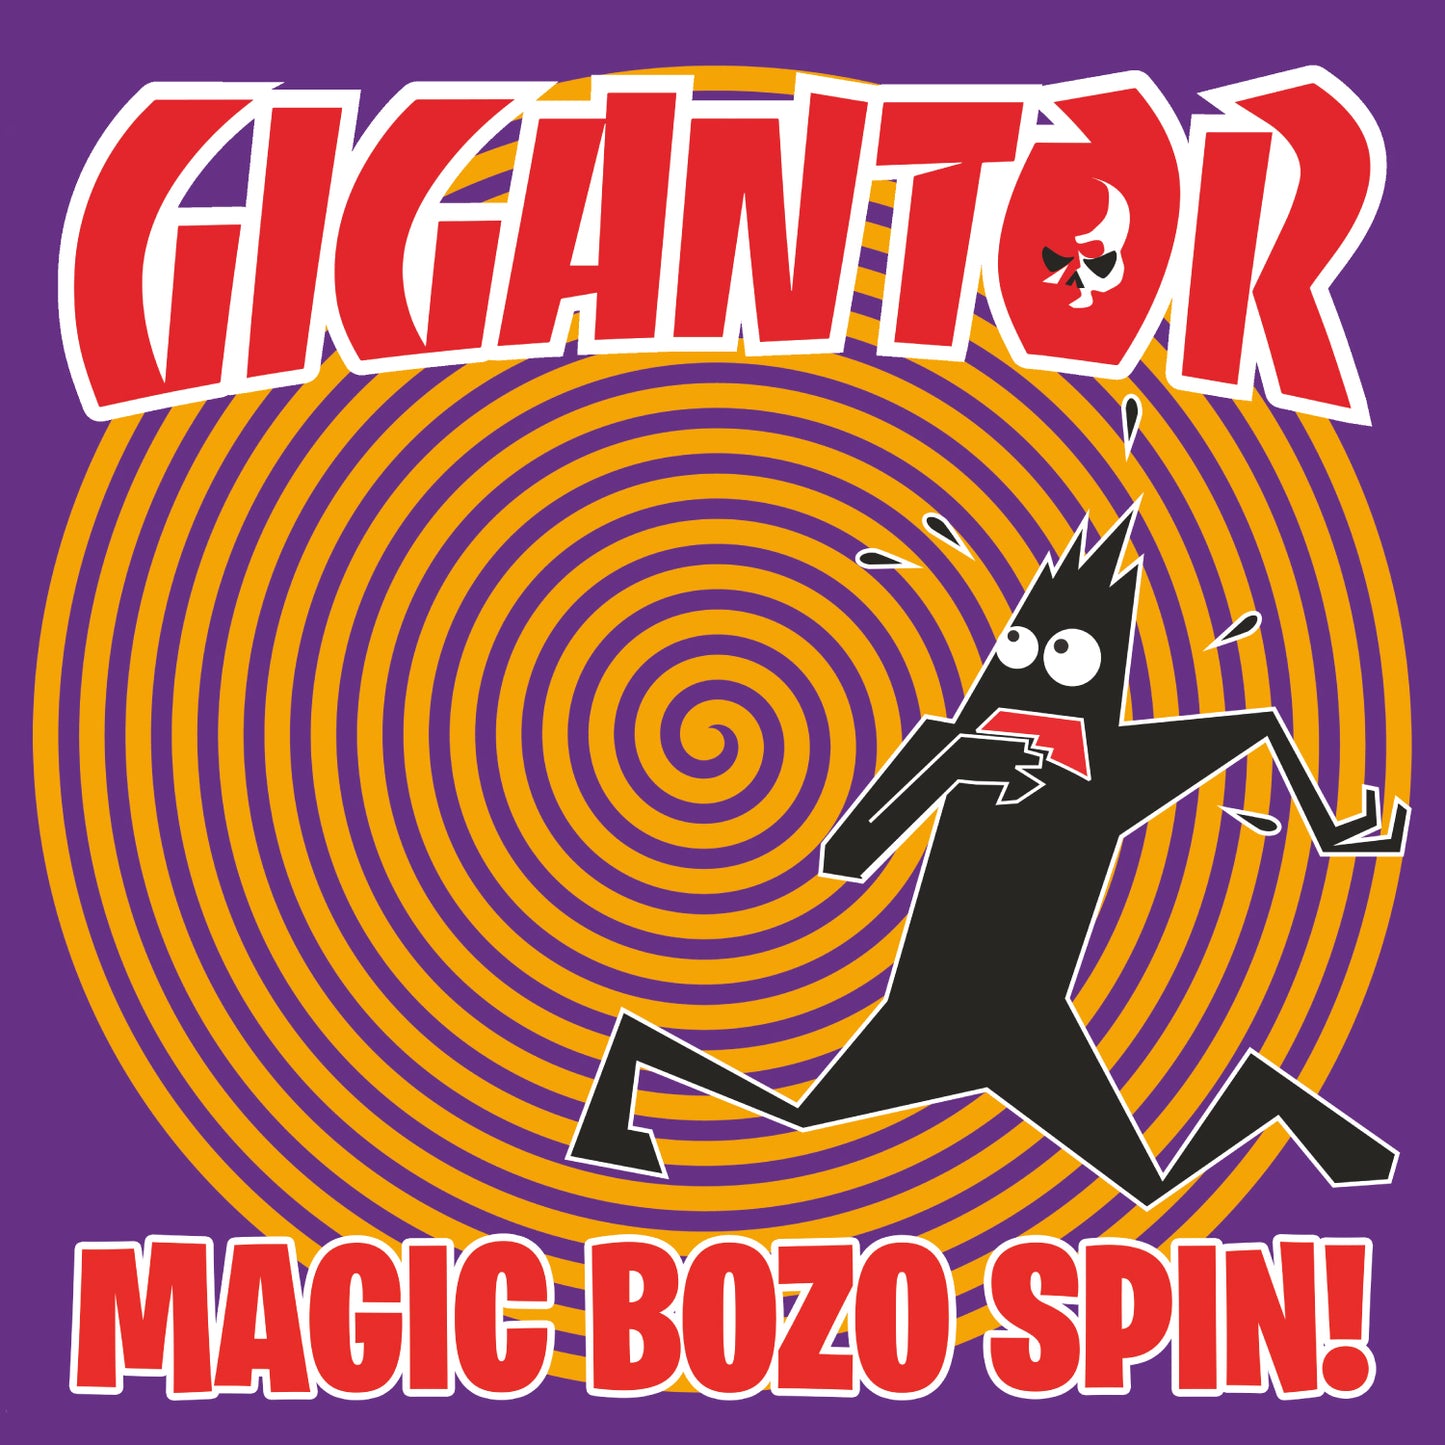 Gigantor - "Magic Bozo Spin" LP